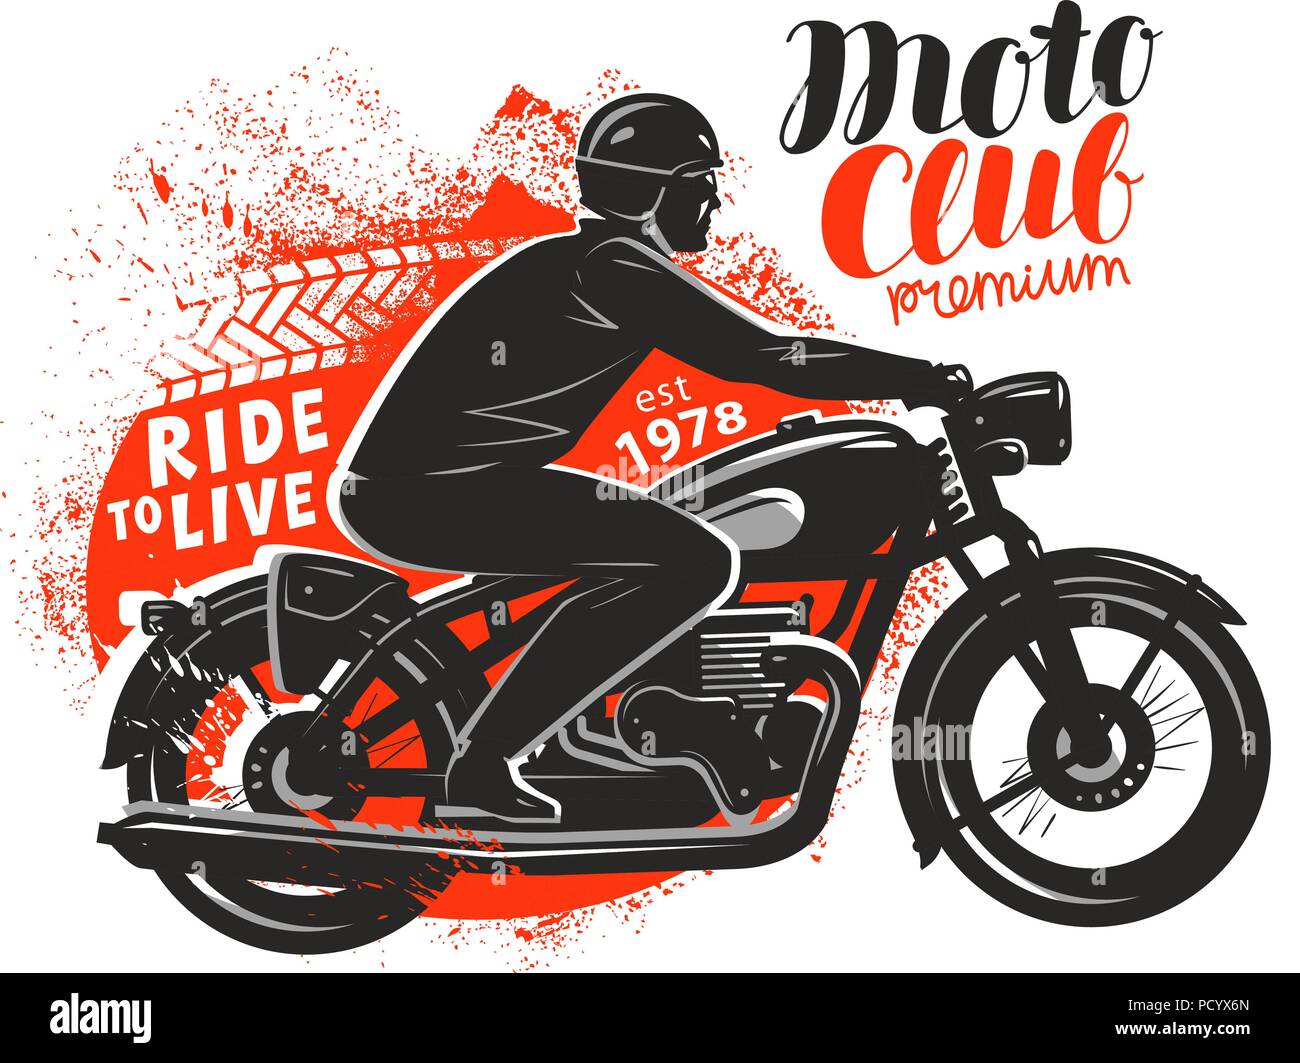 Motor club, banner or poster. Biker rides a retro motorcycle. Vector illustration Stock Vector